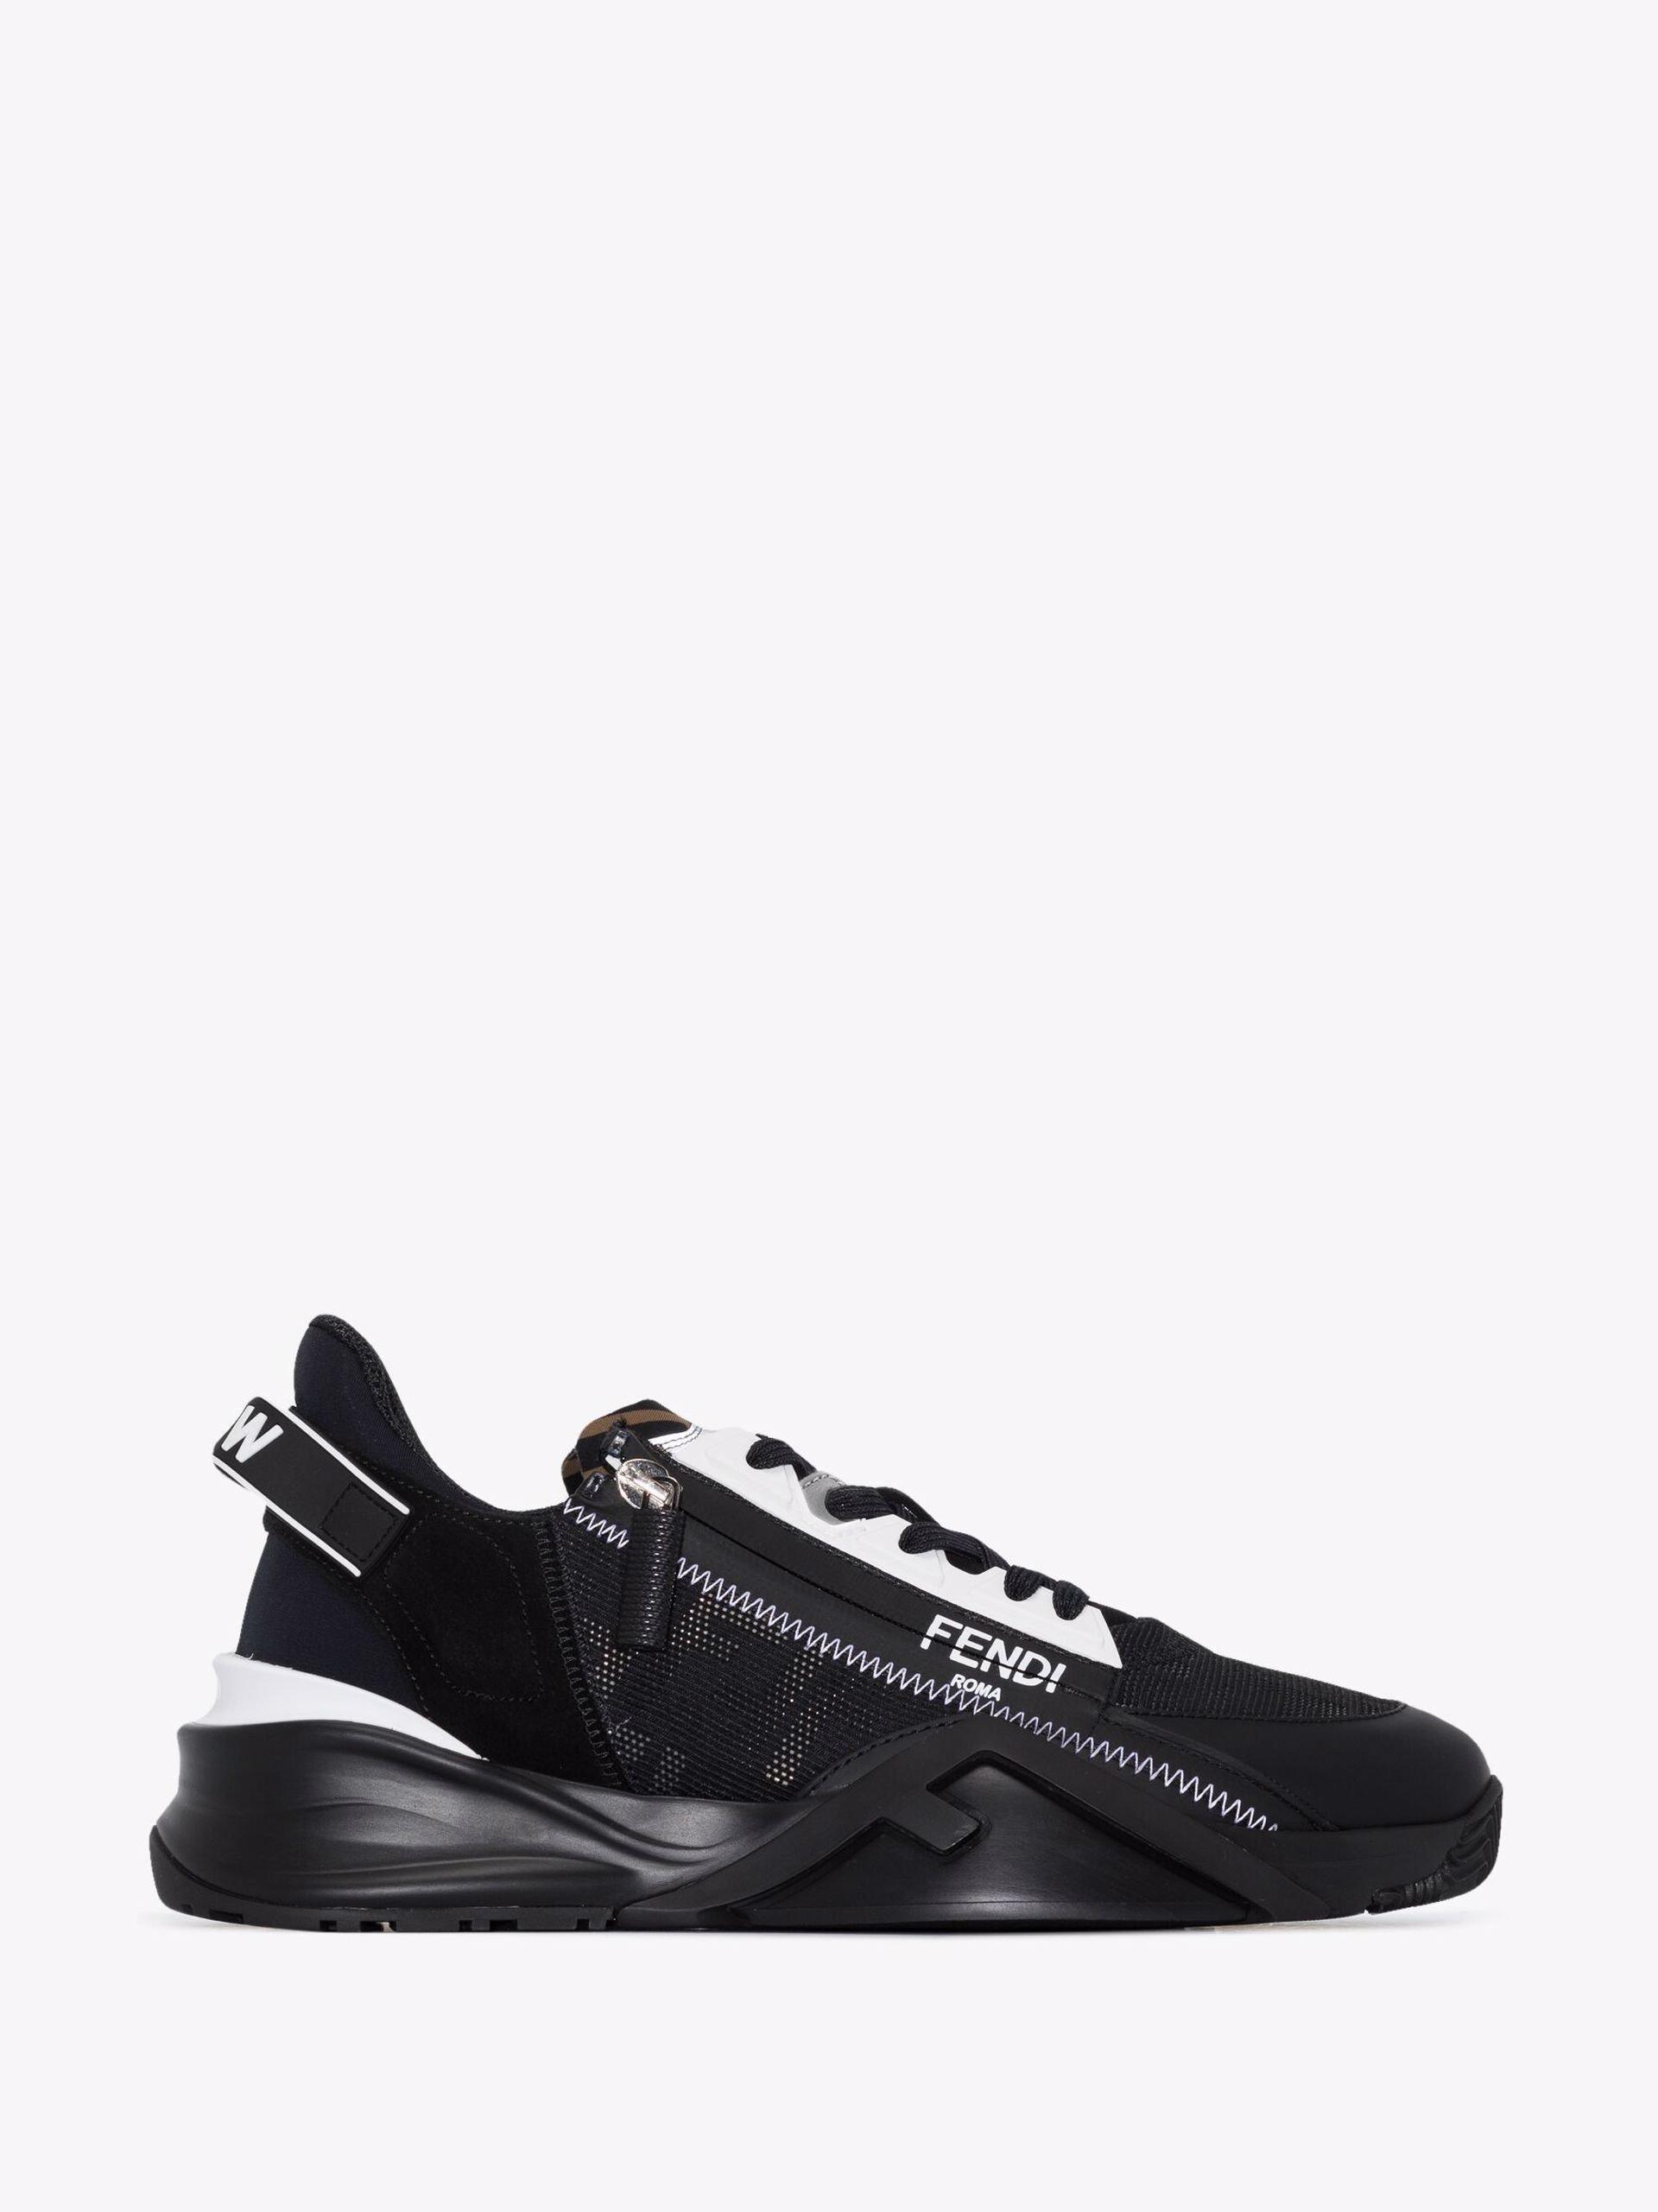 Fendi Black Flow Low Top Leather Sneakers | Lyst